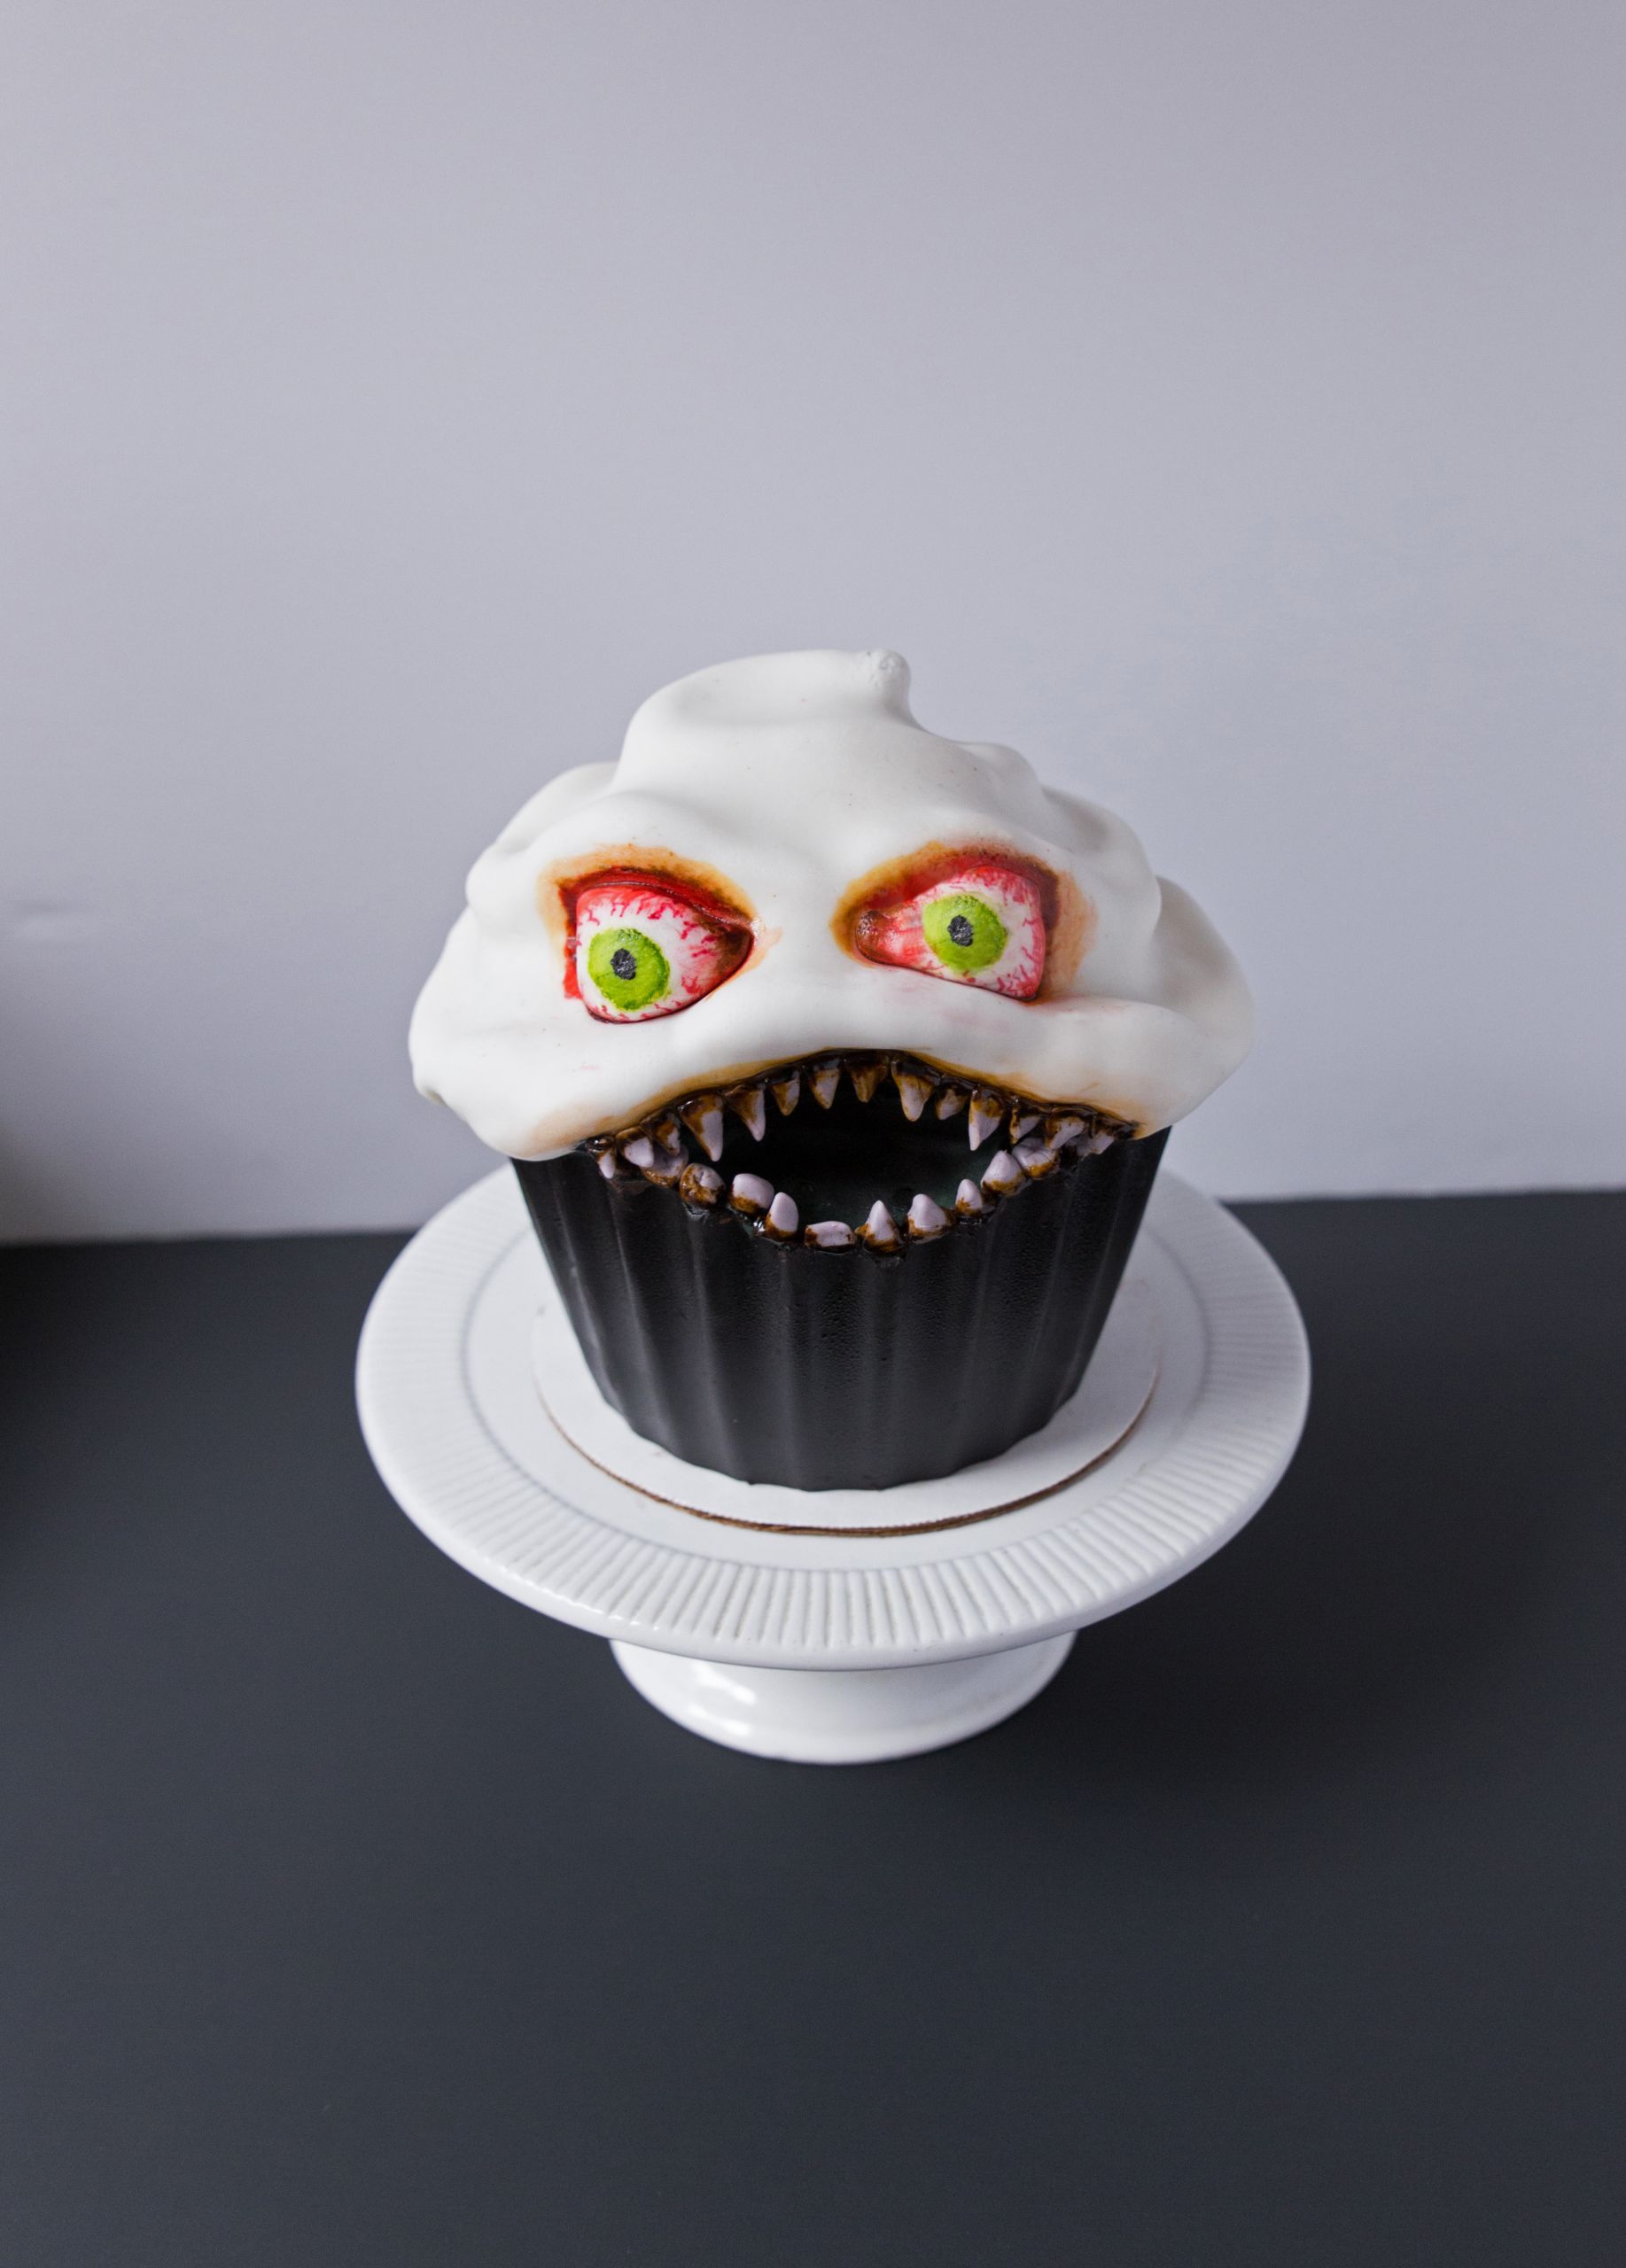 Scarey Halloween Cakes
 Scary Halloween Cake Ferocious Cupcake – Say it With Cake